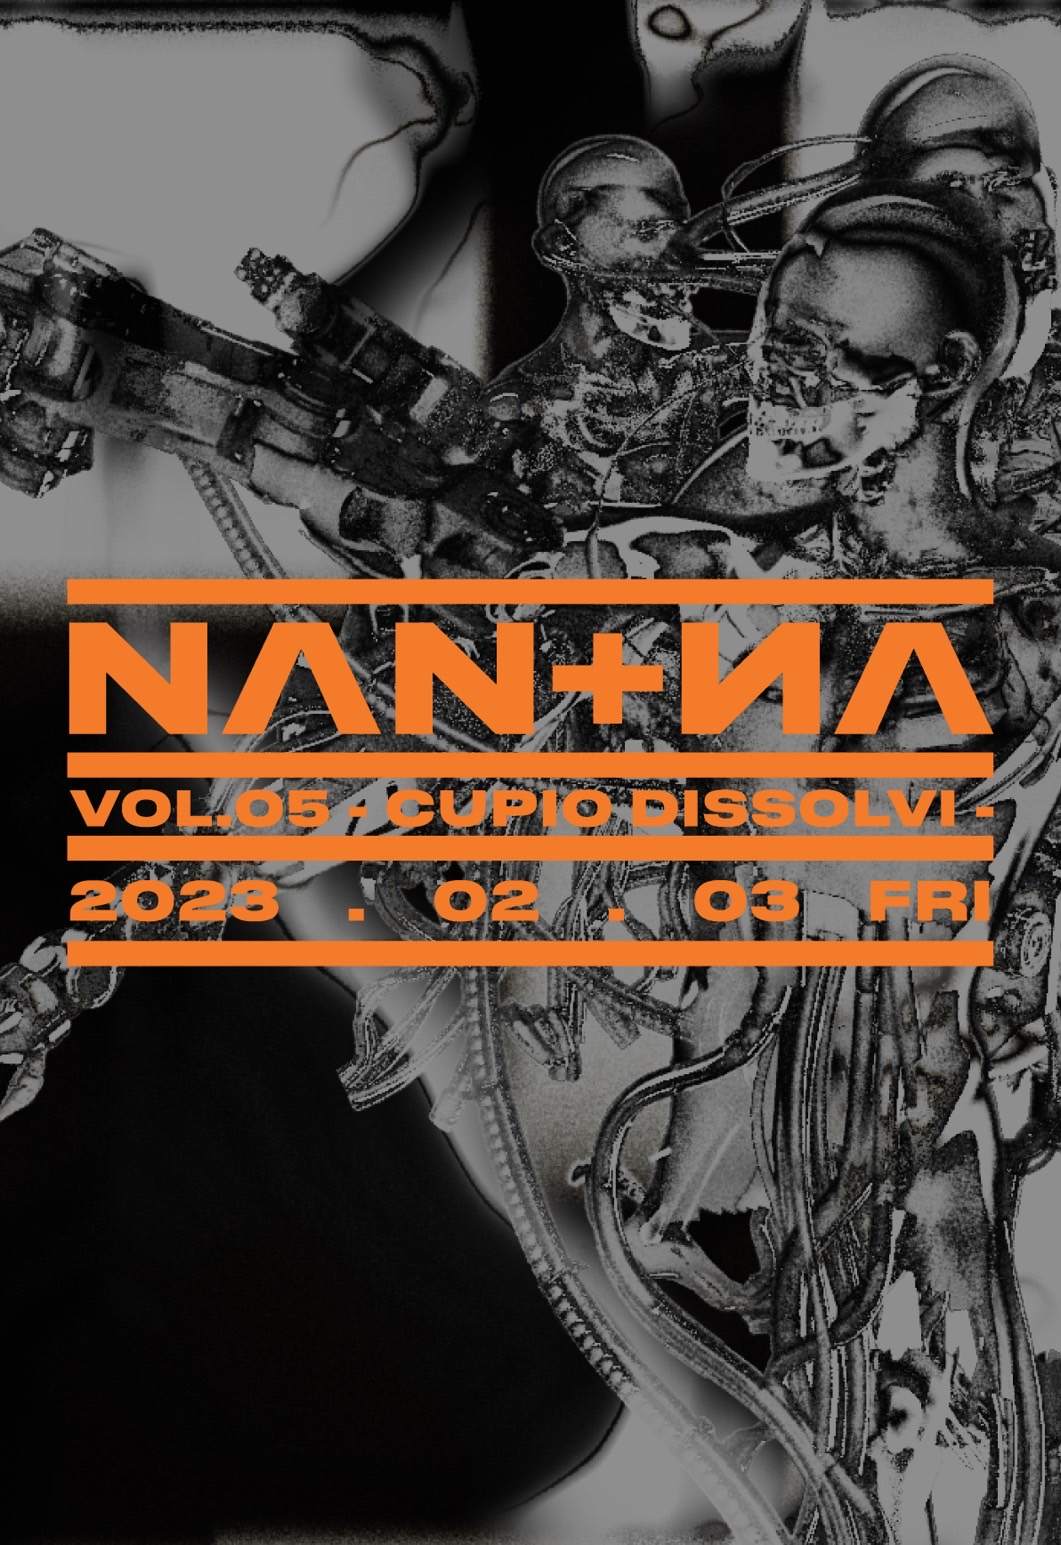 NAN+NA Vol.05 - Cupio dissolvi - - フライヤー裏